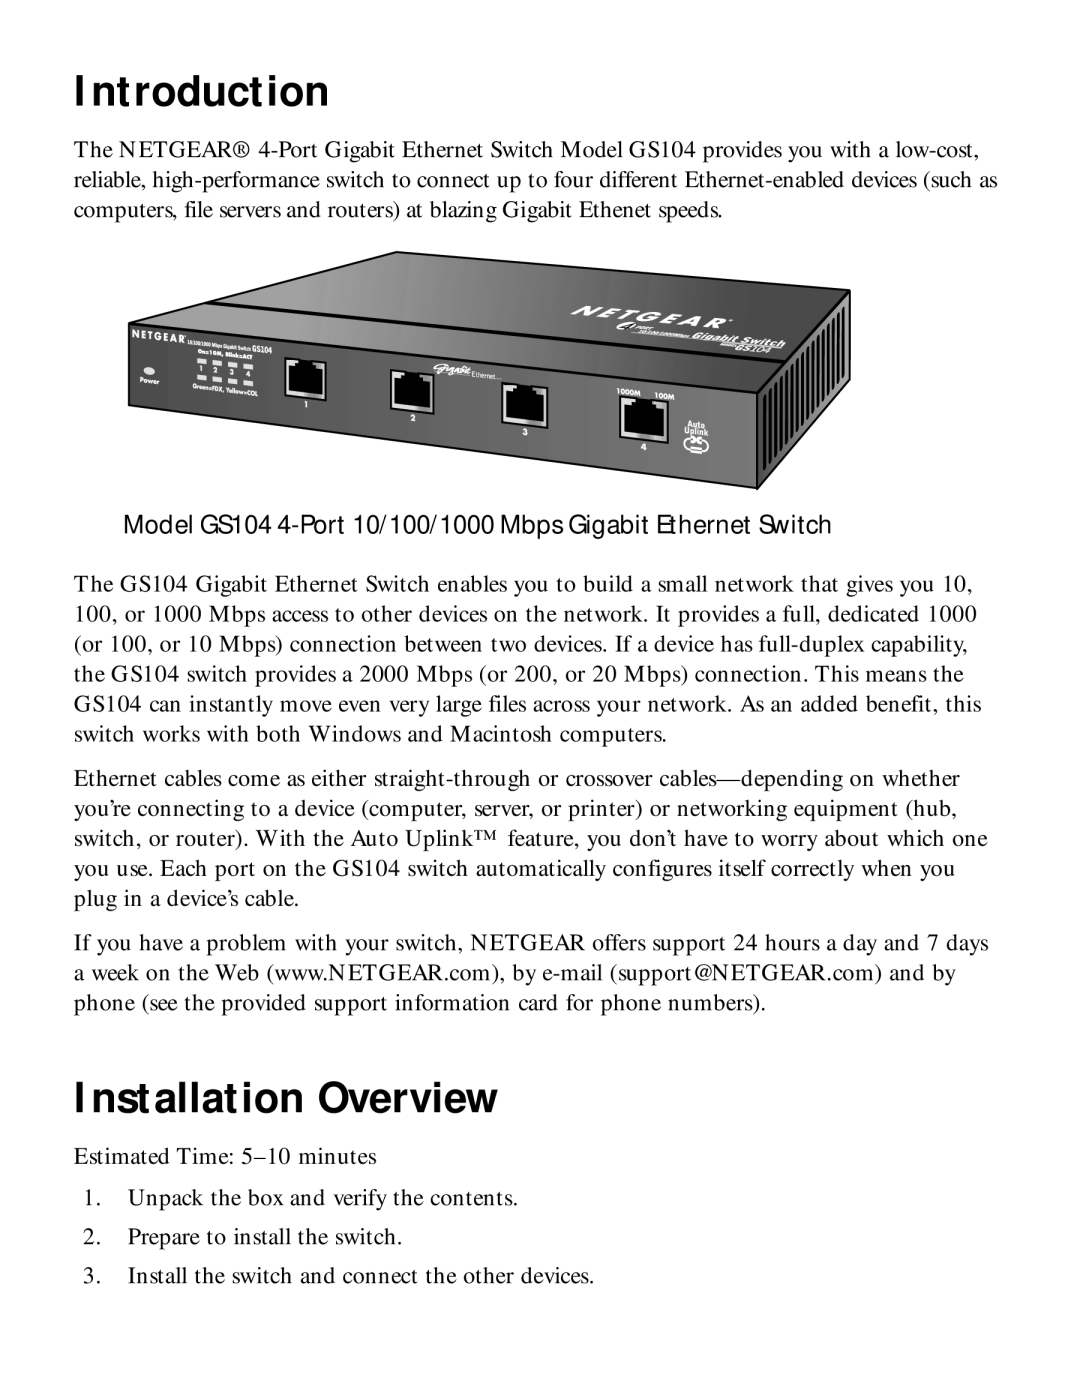 NETGEAR manual Introduction, Installation Overview, Model GS104 4-Port 10/100/1000 Mbps Gigabit Ethernet Switch 